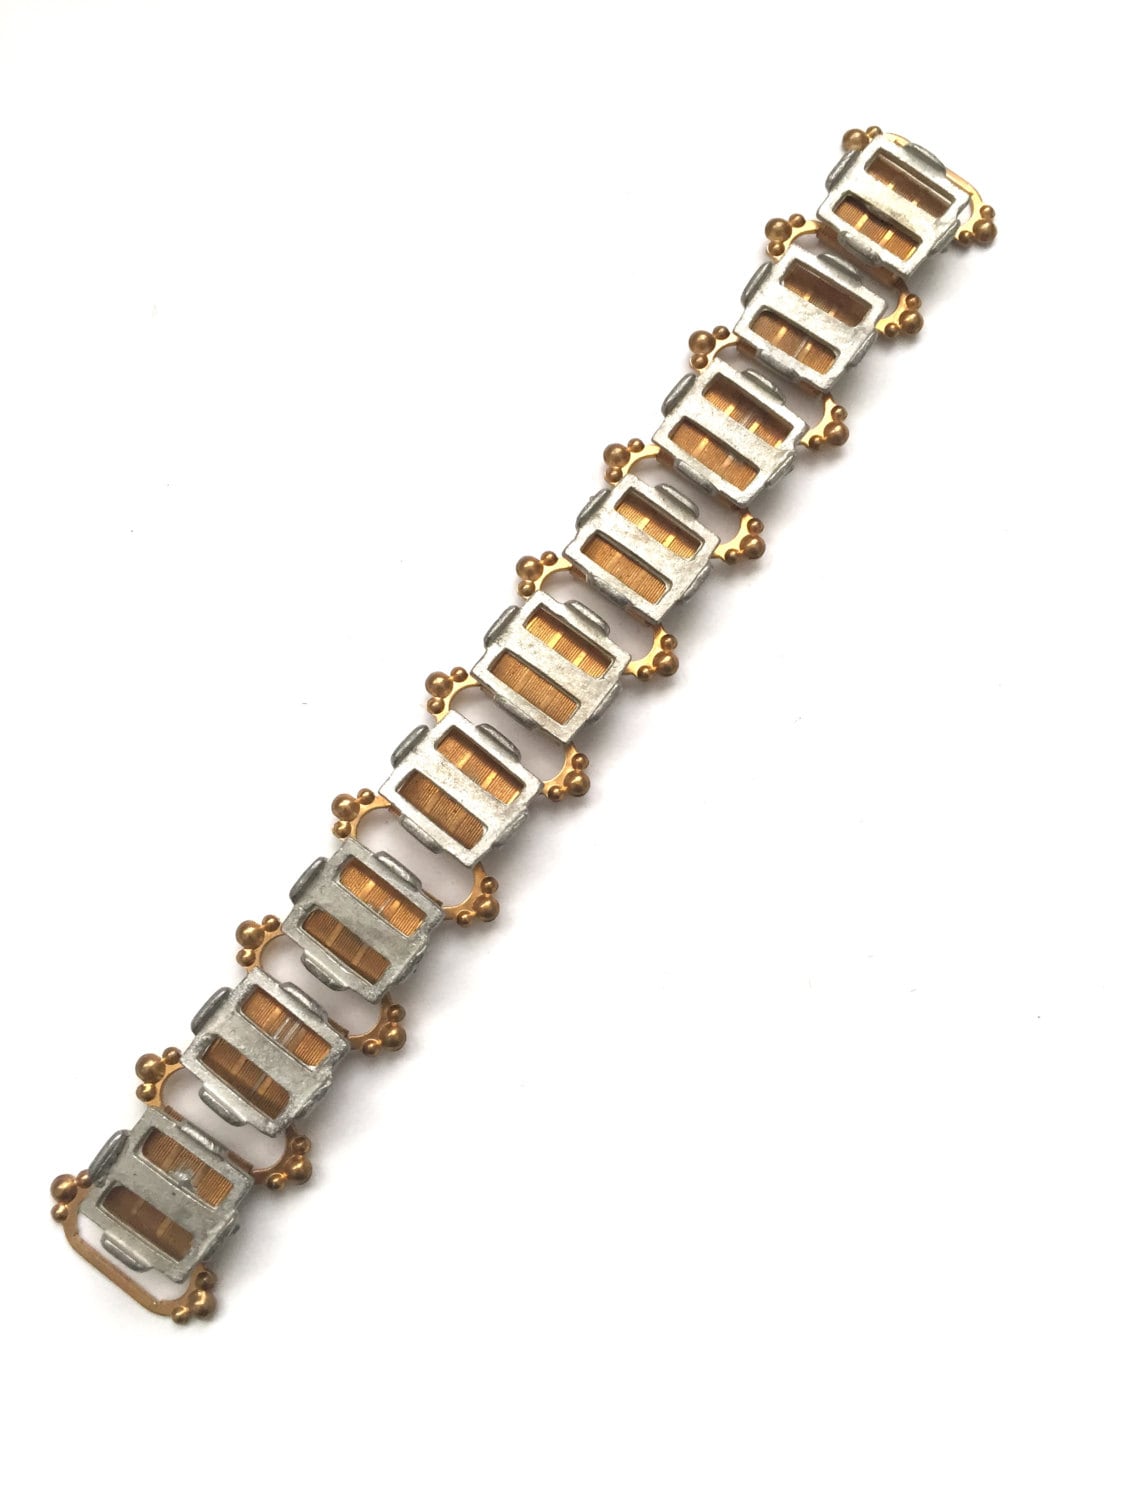 Vintage Brass and Steel Bracelet Blank Book Chain - Etsy